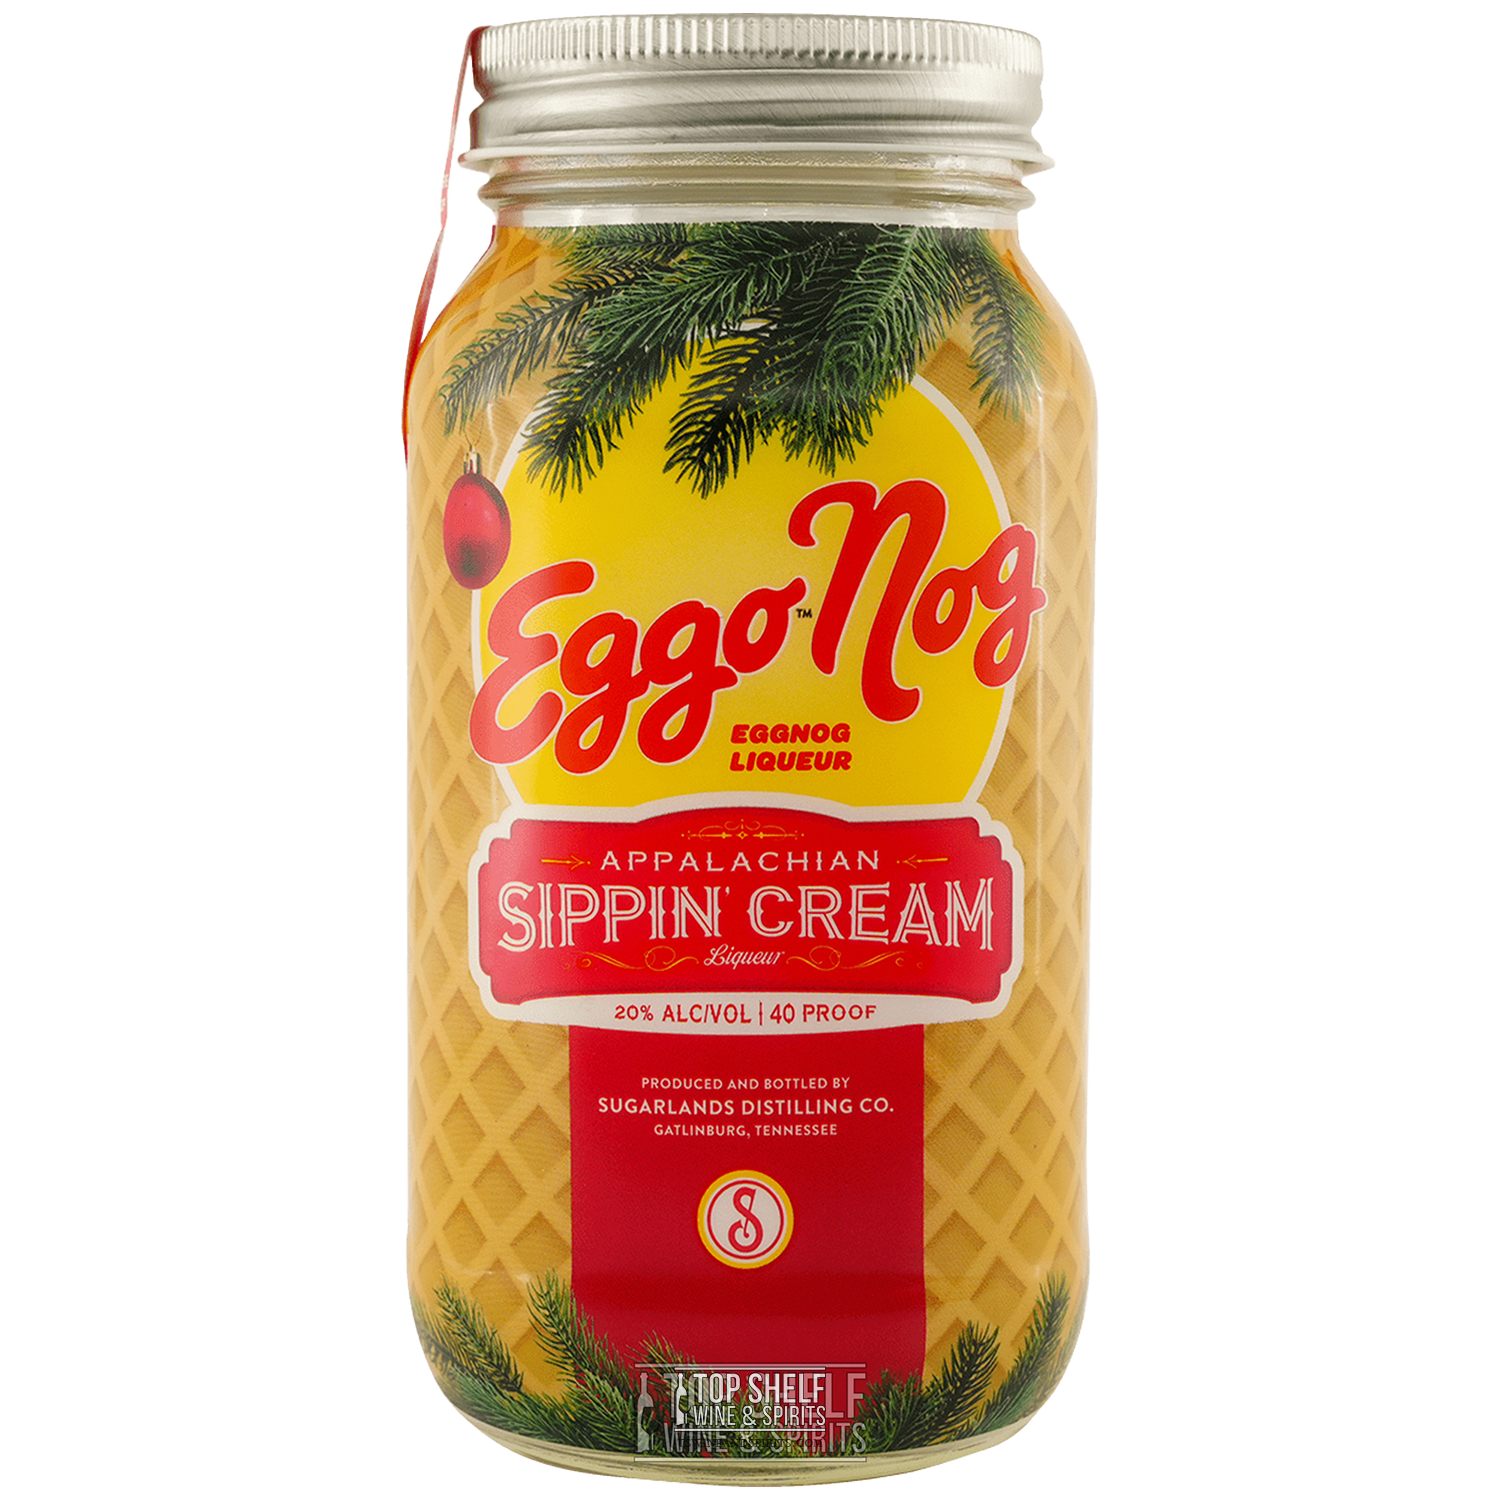 Sugarlands Eggo Nog Appalachian Sipping Cream